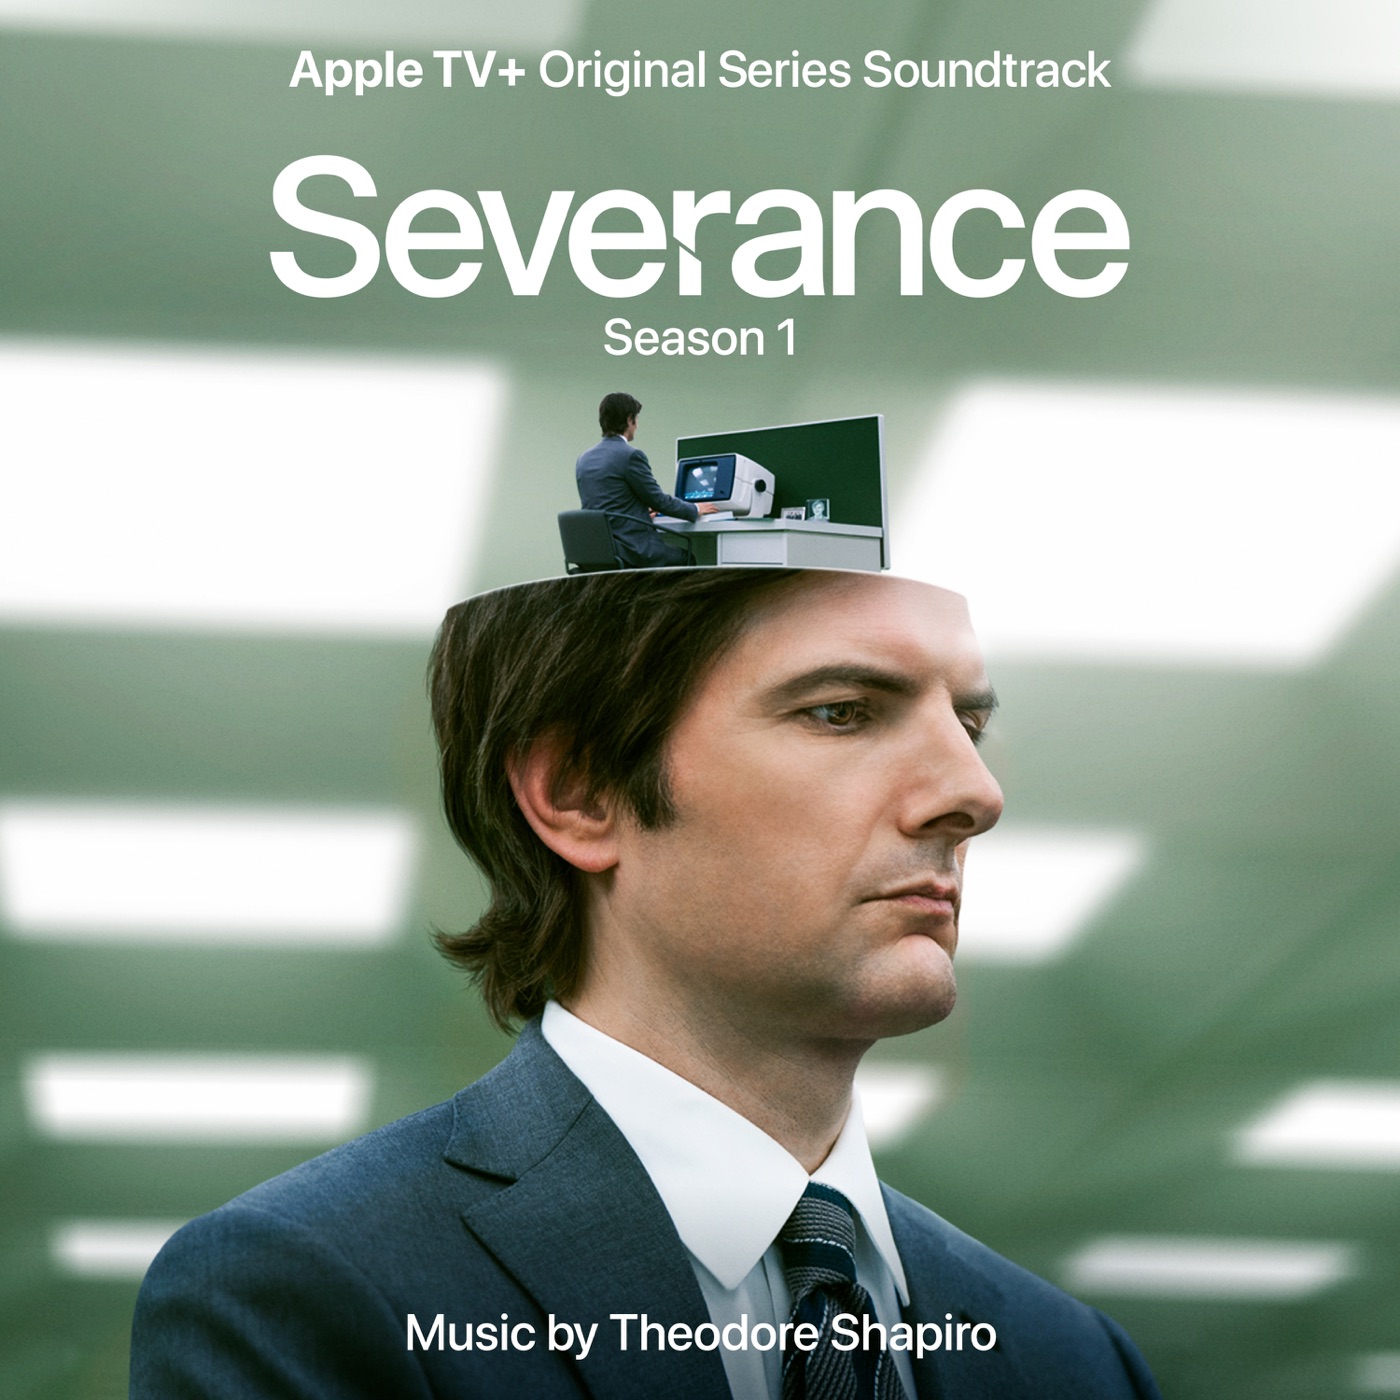 Severance: Season 1 (Apple TV+ Original Series Soundtrack) by Theodore Shapiro